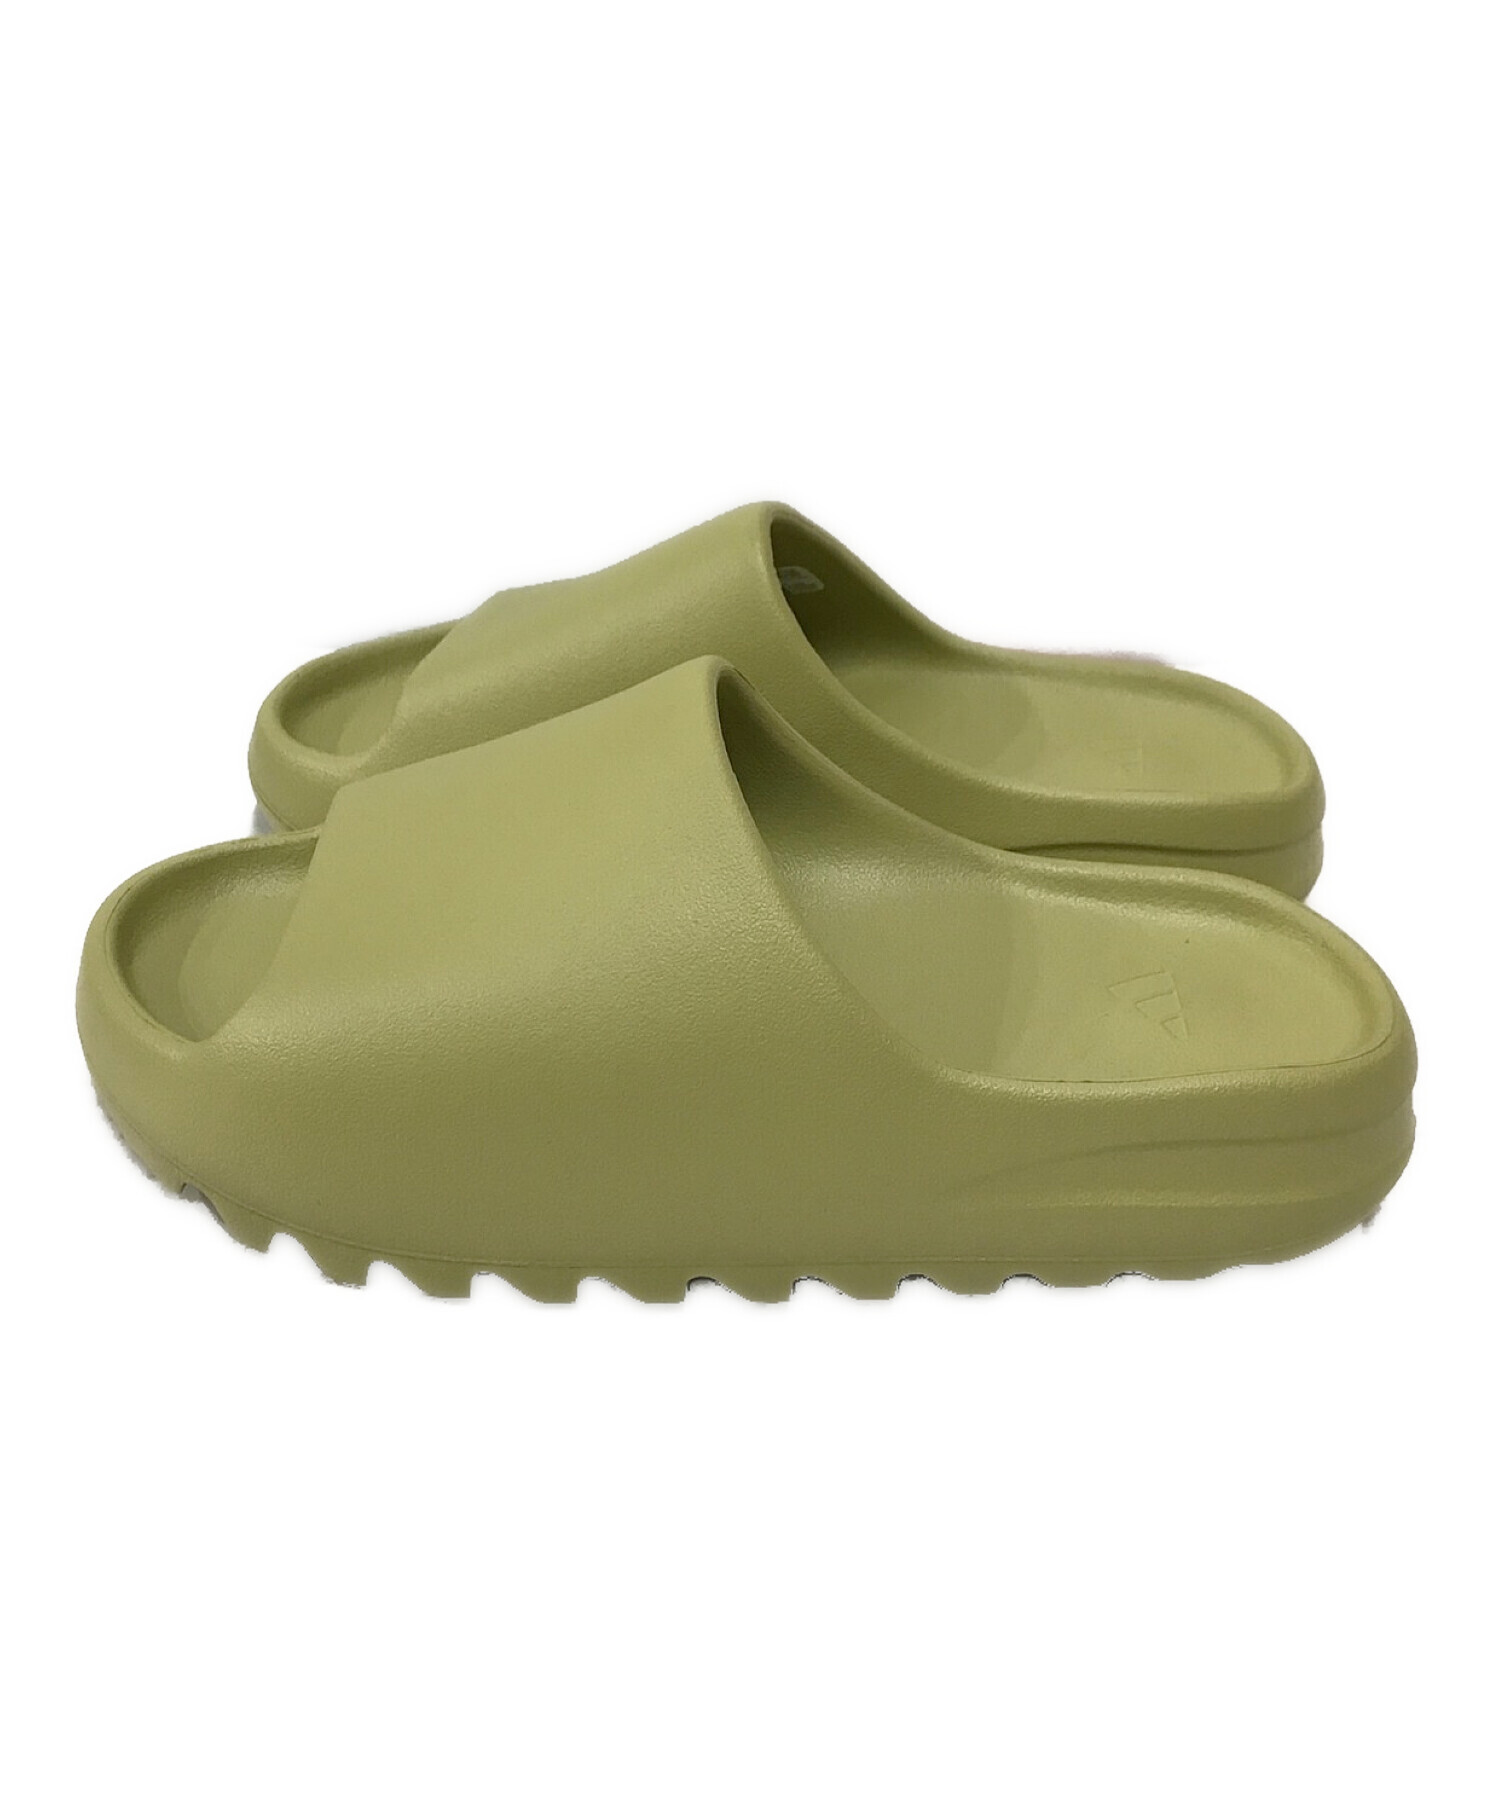 adidas YEEZY (アディダス イージー) Slide Resin 黄緑 サイズ:275